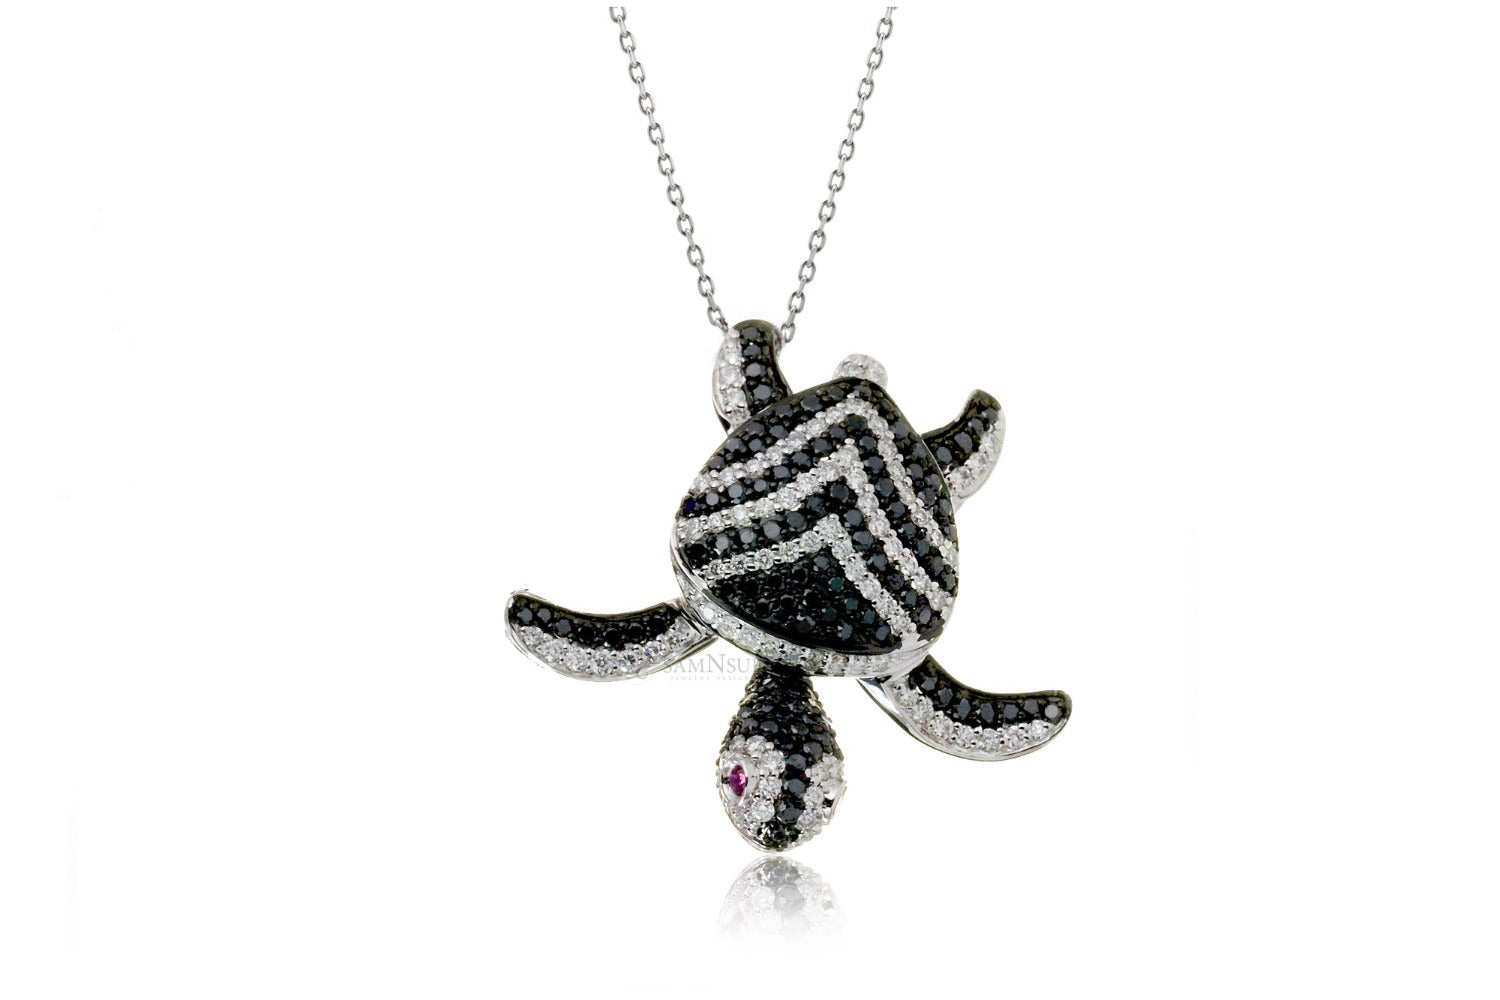 Turtle diamond pendant necklace Chevron bottom flipper style in black diamond